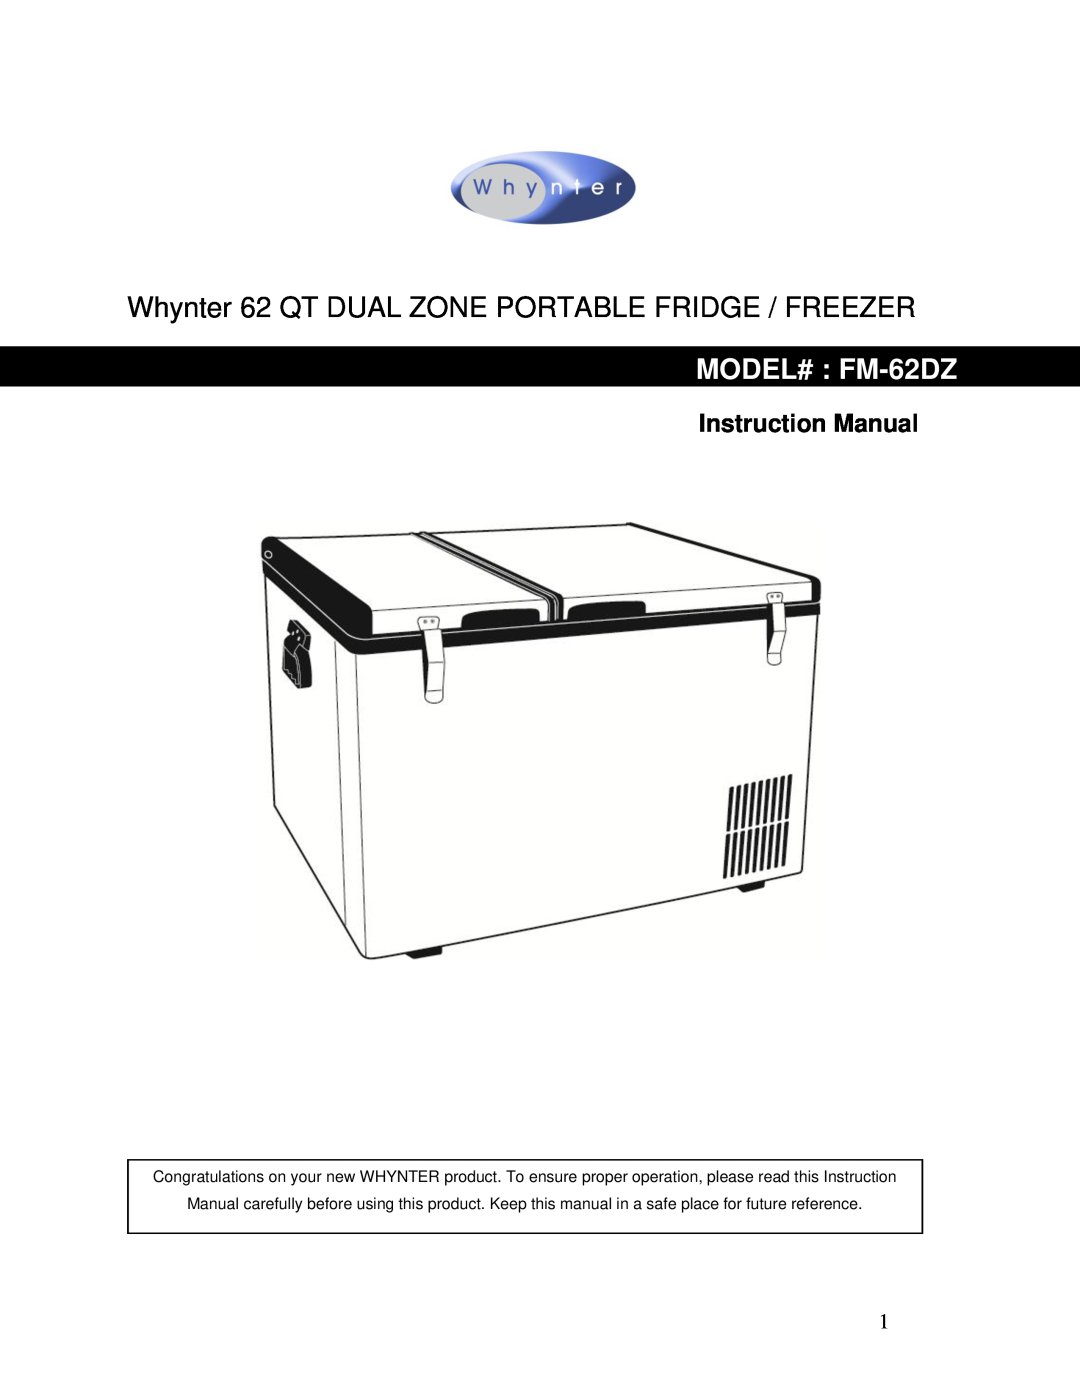 Whynter instruction manual Whynter 62 QT DUAL ZONE PORTABLE FRIDGE / FREEZER, MODEL# FM-62DZ 